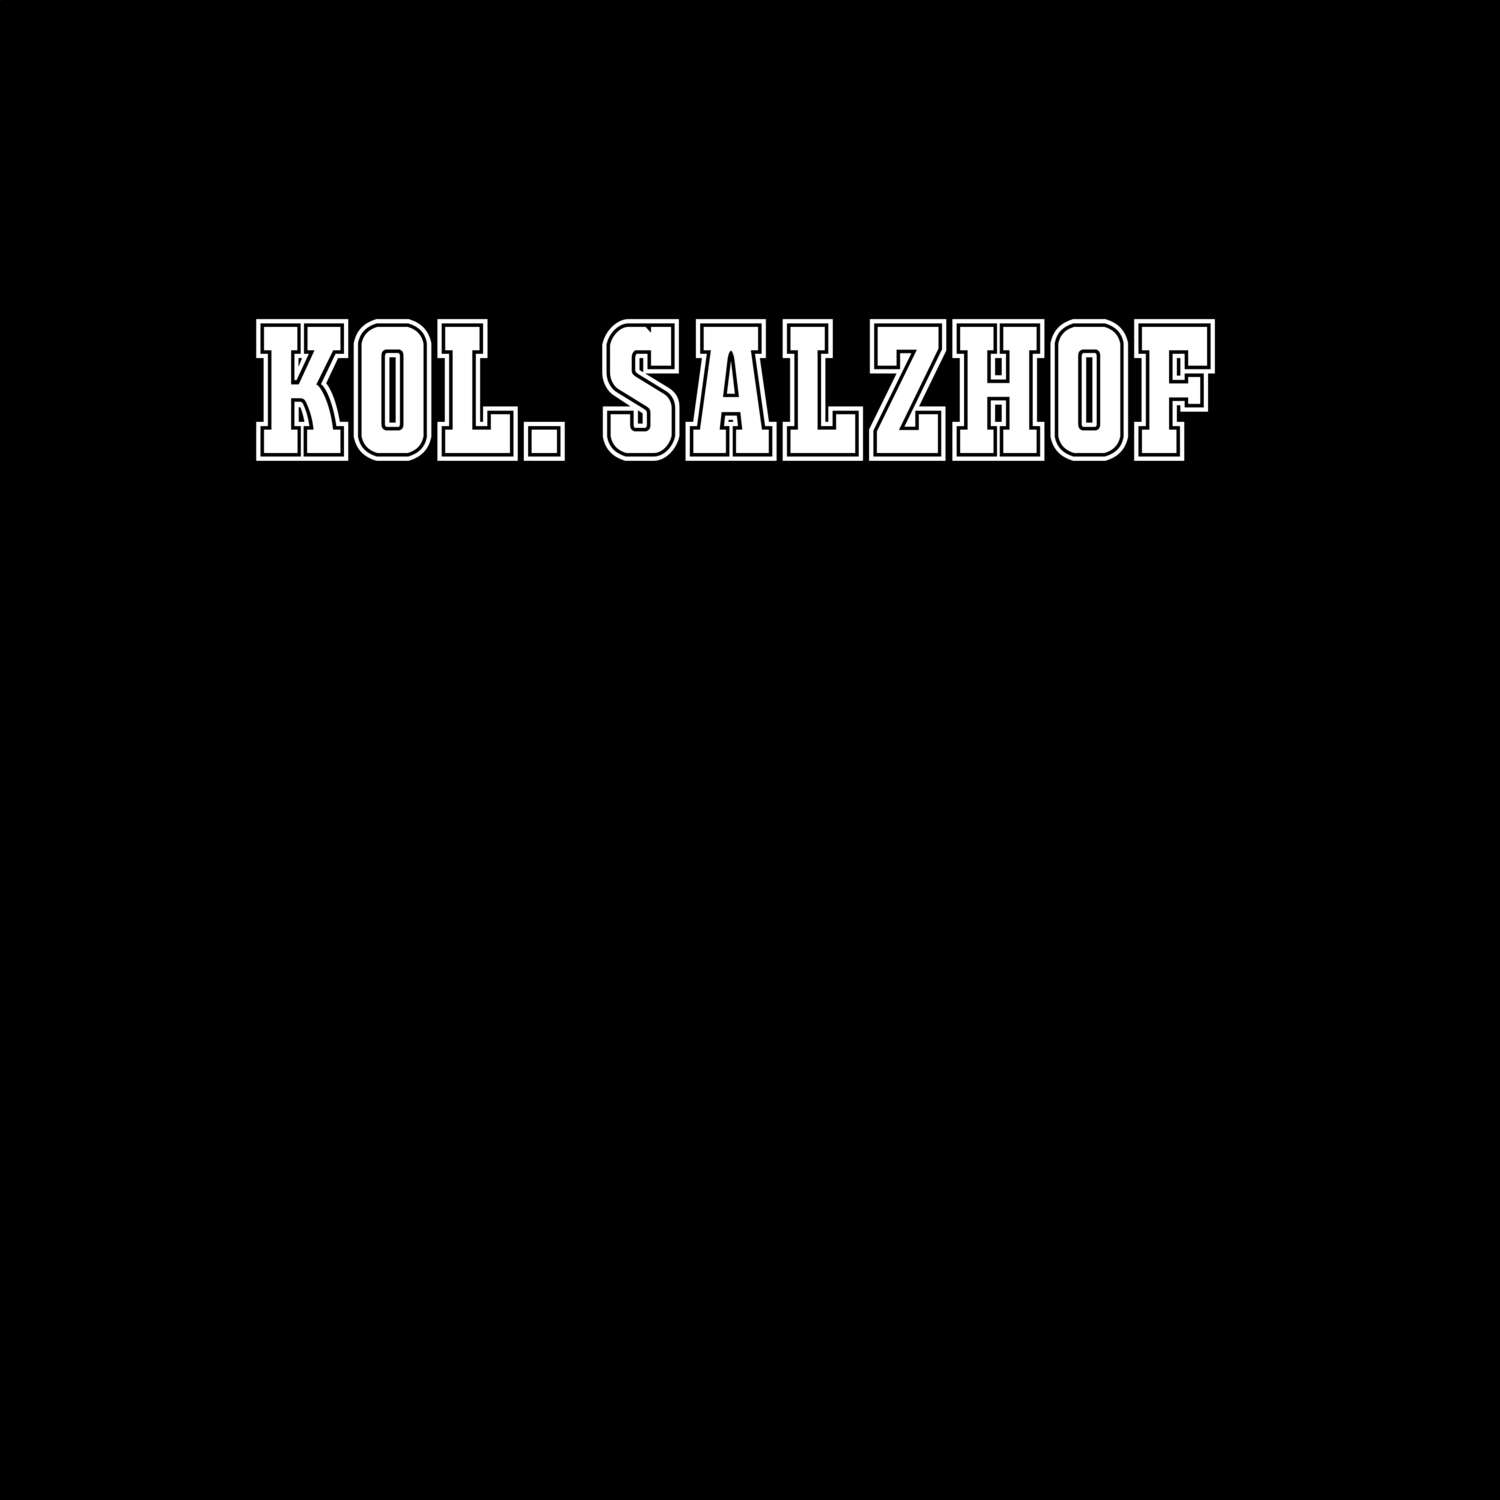 Kol. Salzhof T-Shirt »Classic«